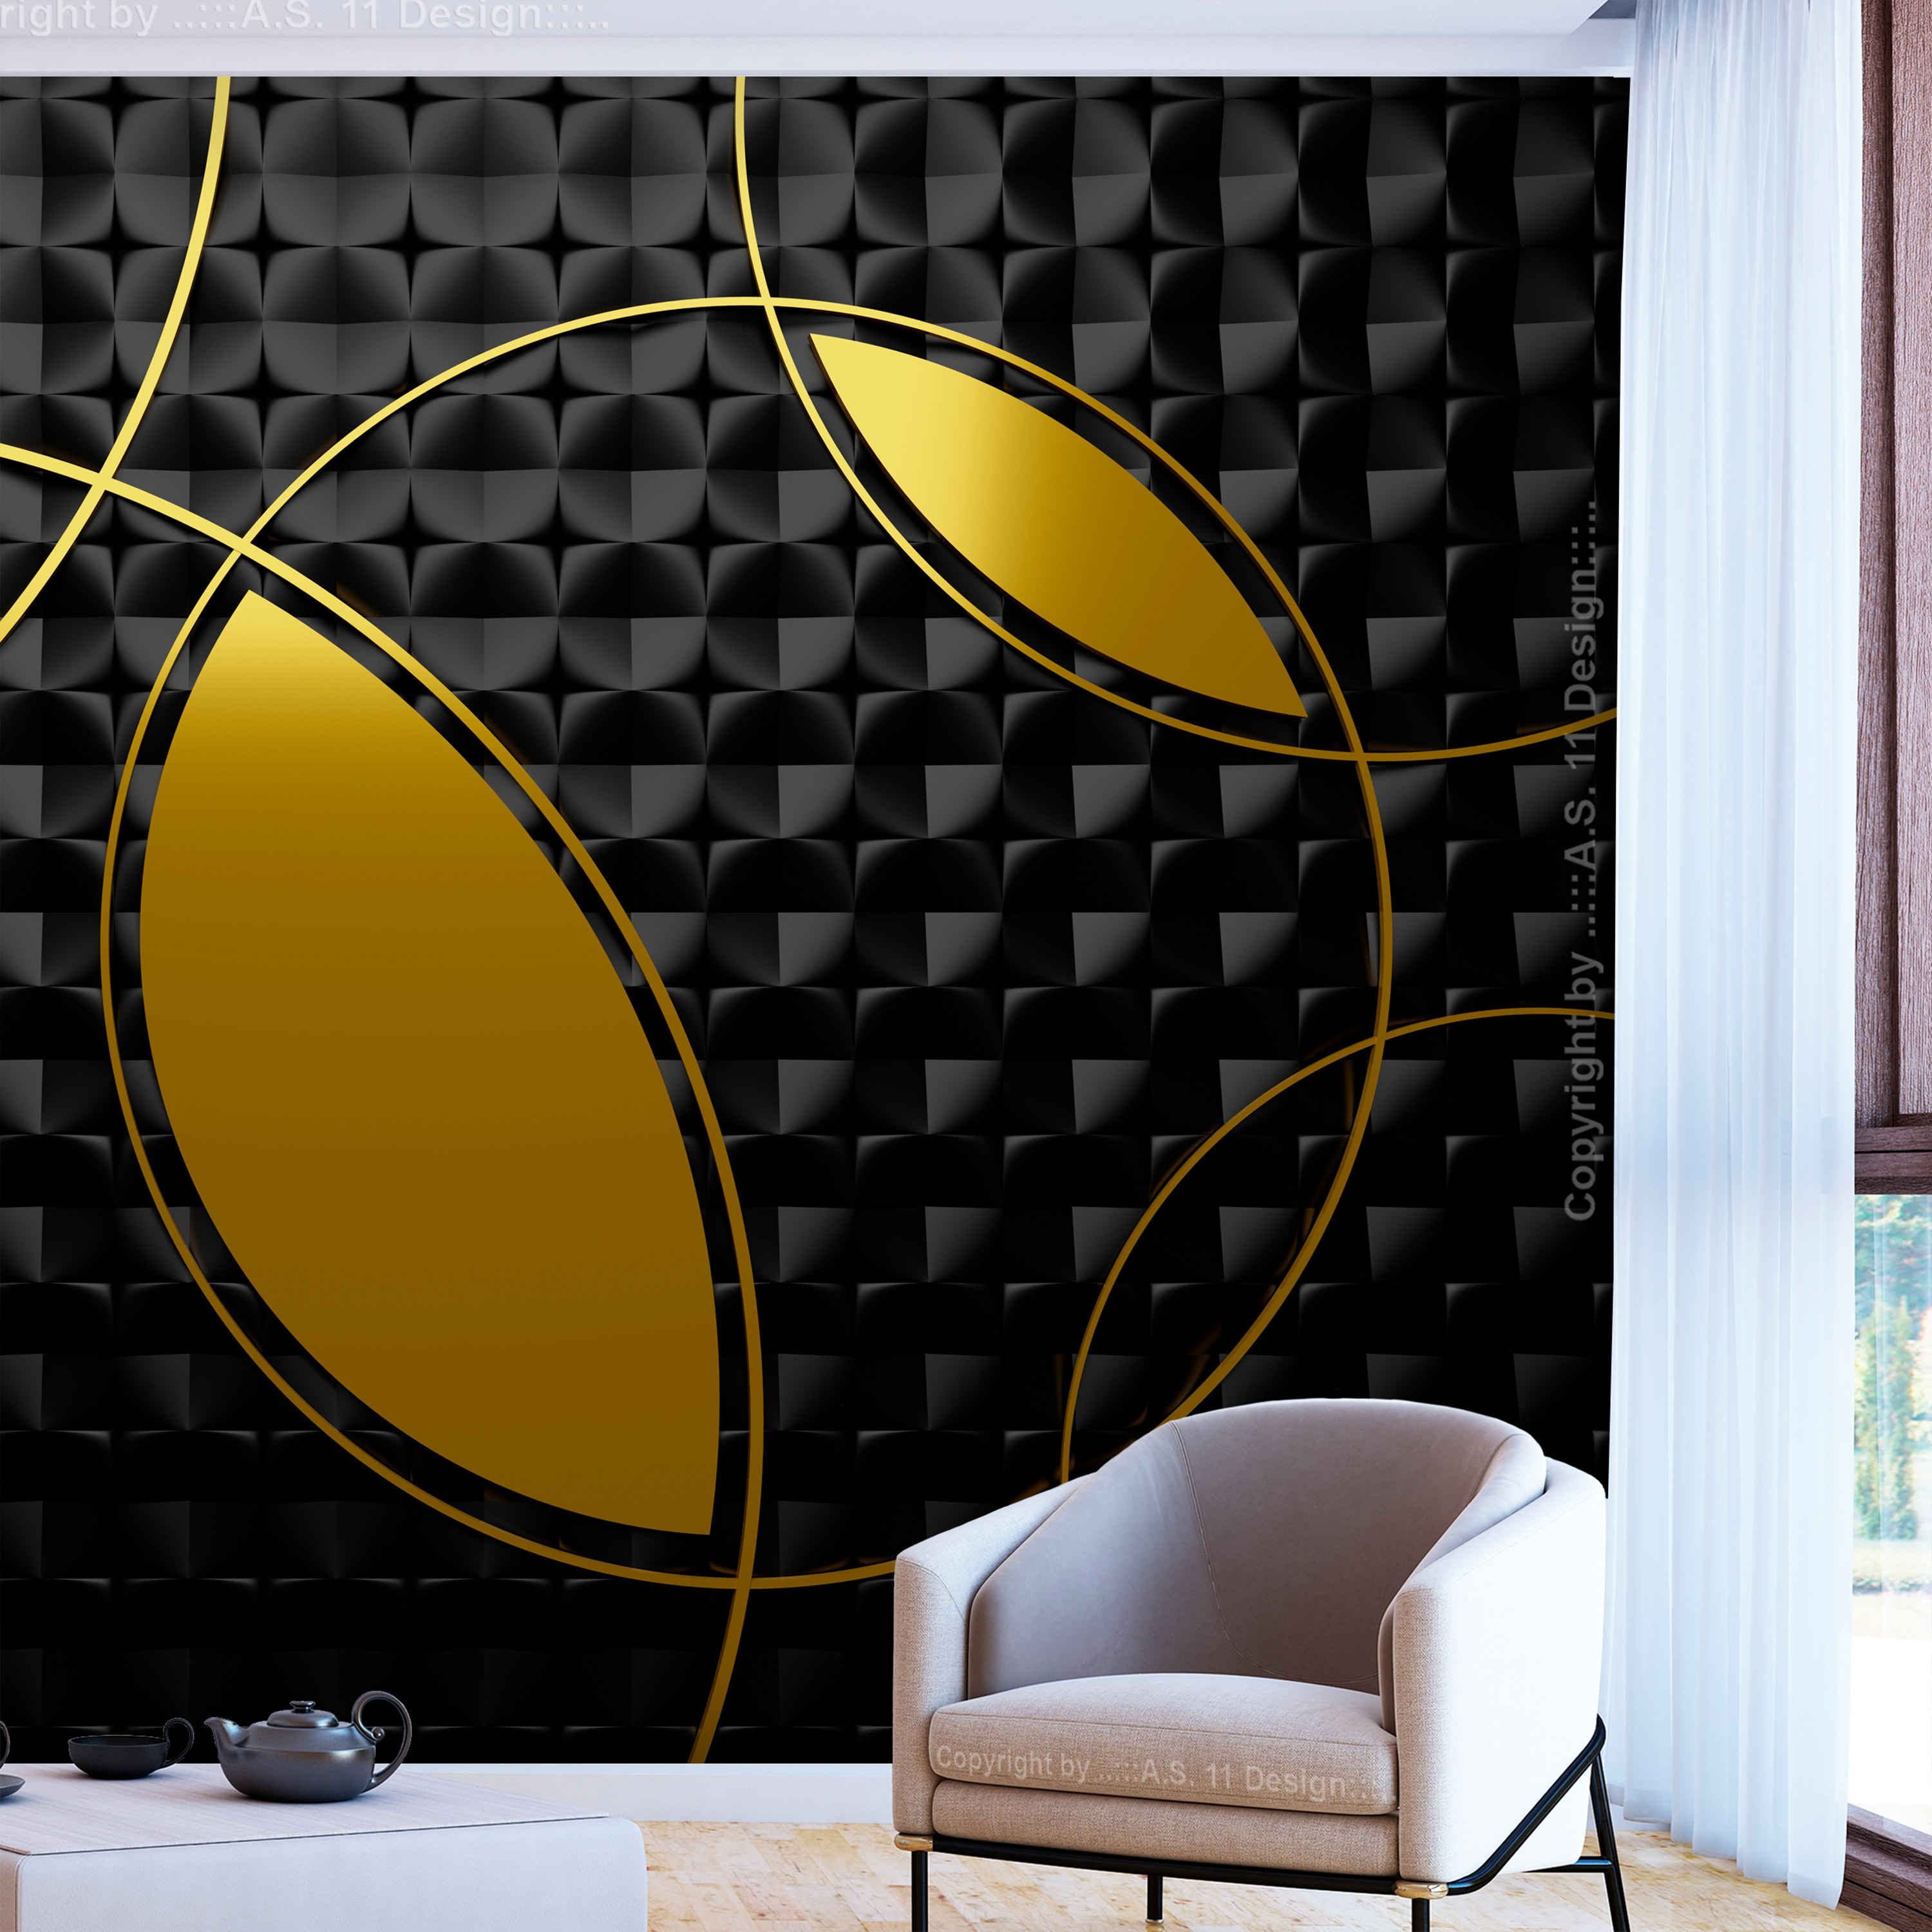 Self-adhesive Wallpaper - Gilding Zones - 147x105